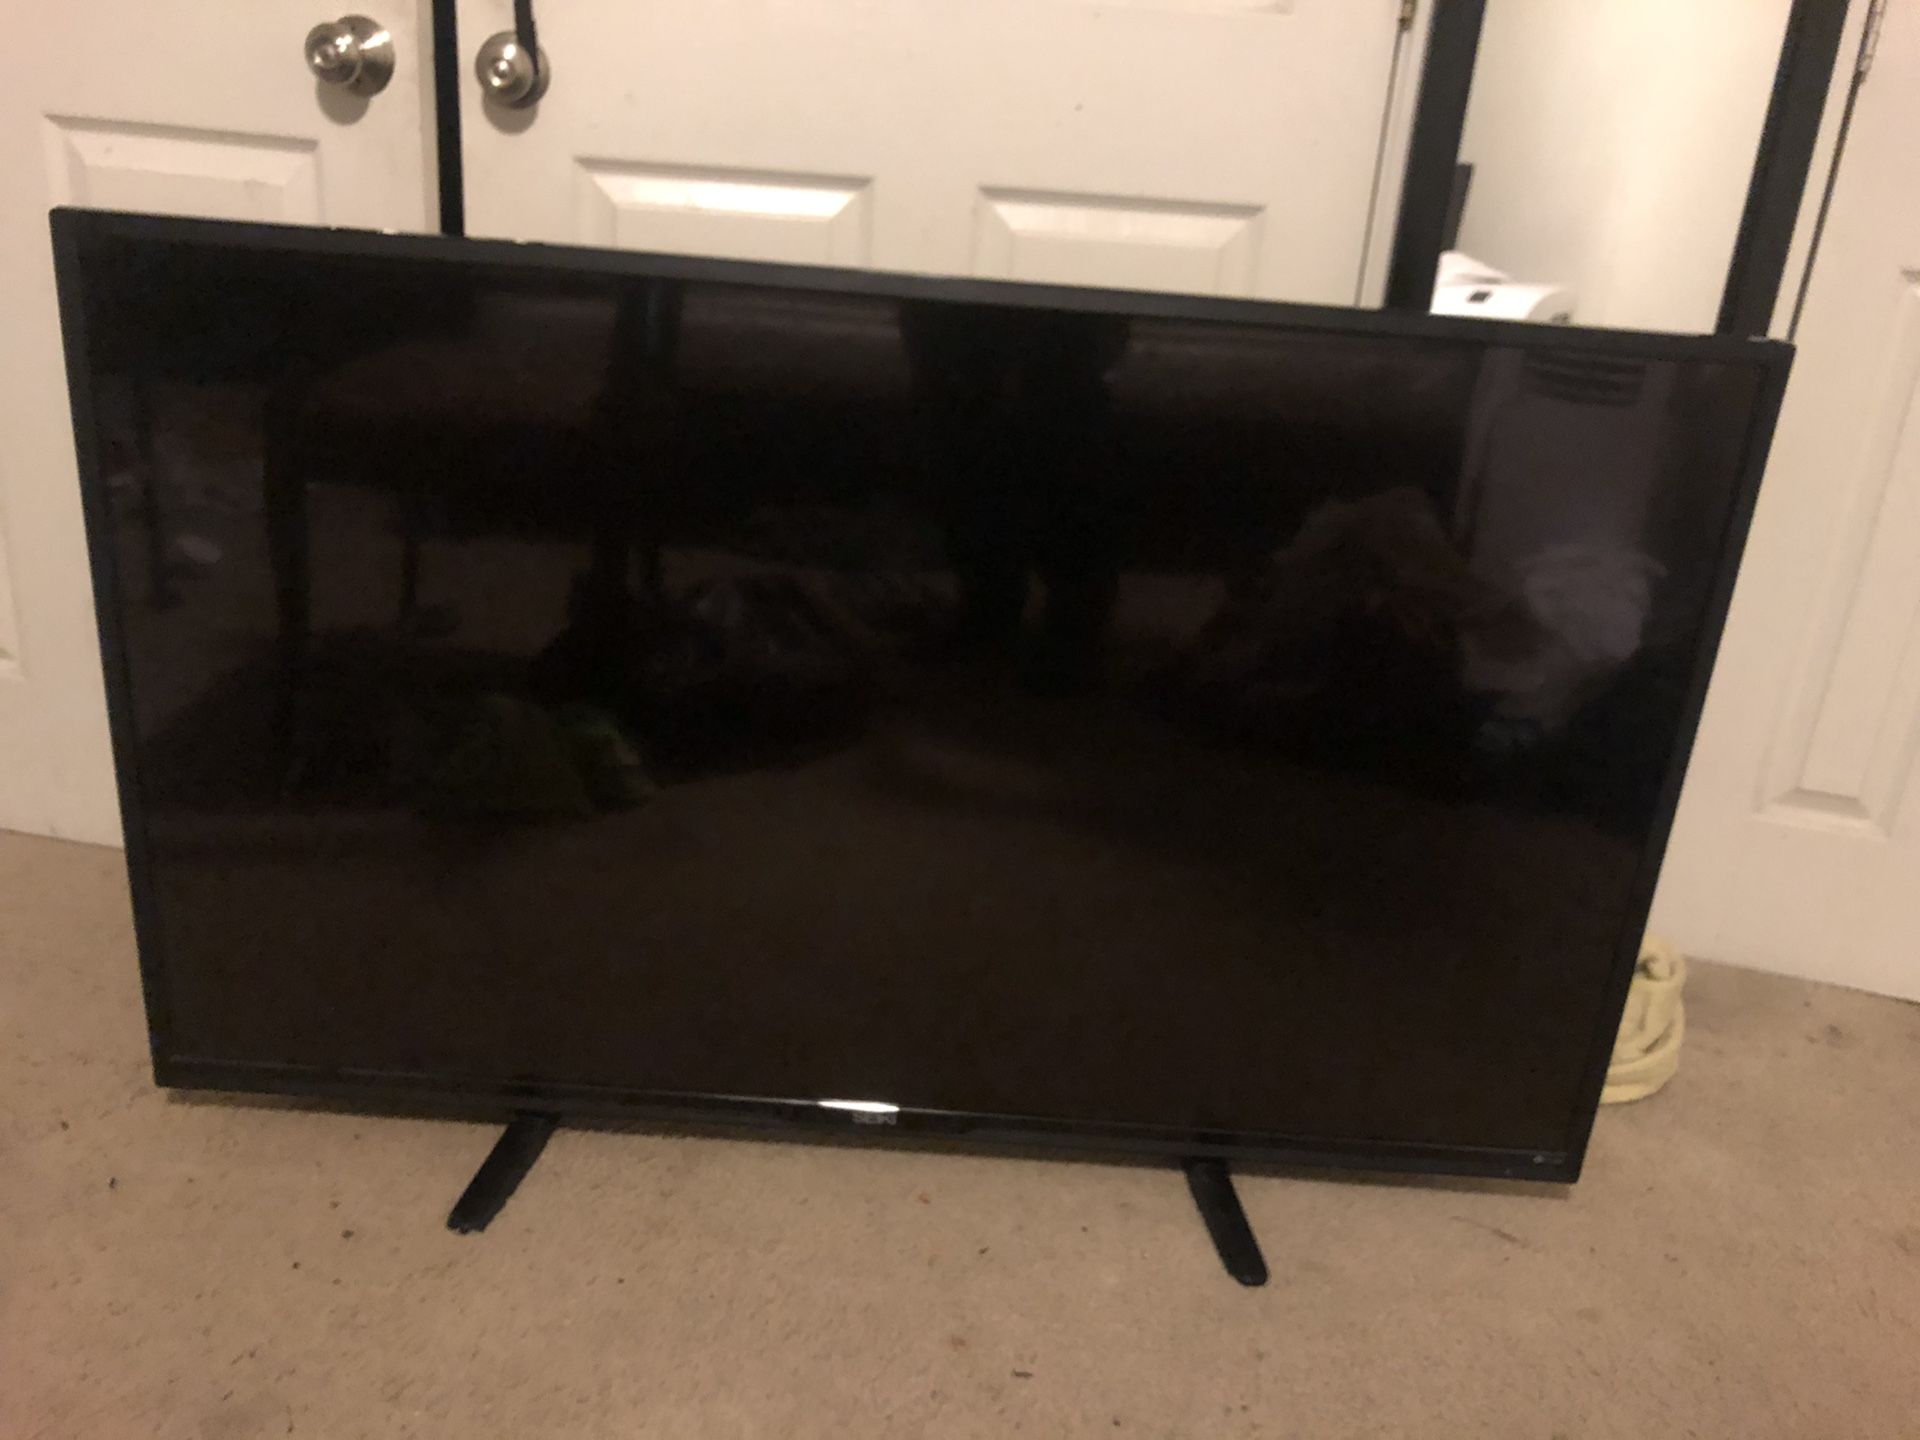 Seiki “55” inch flat screen TV